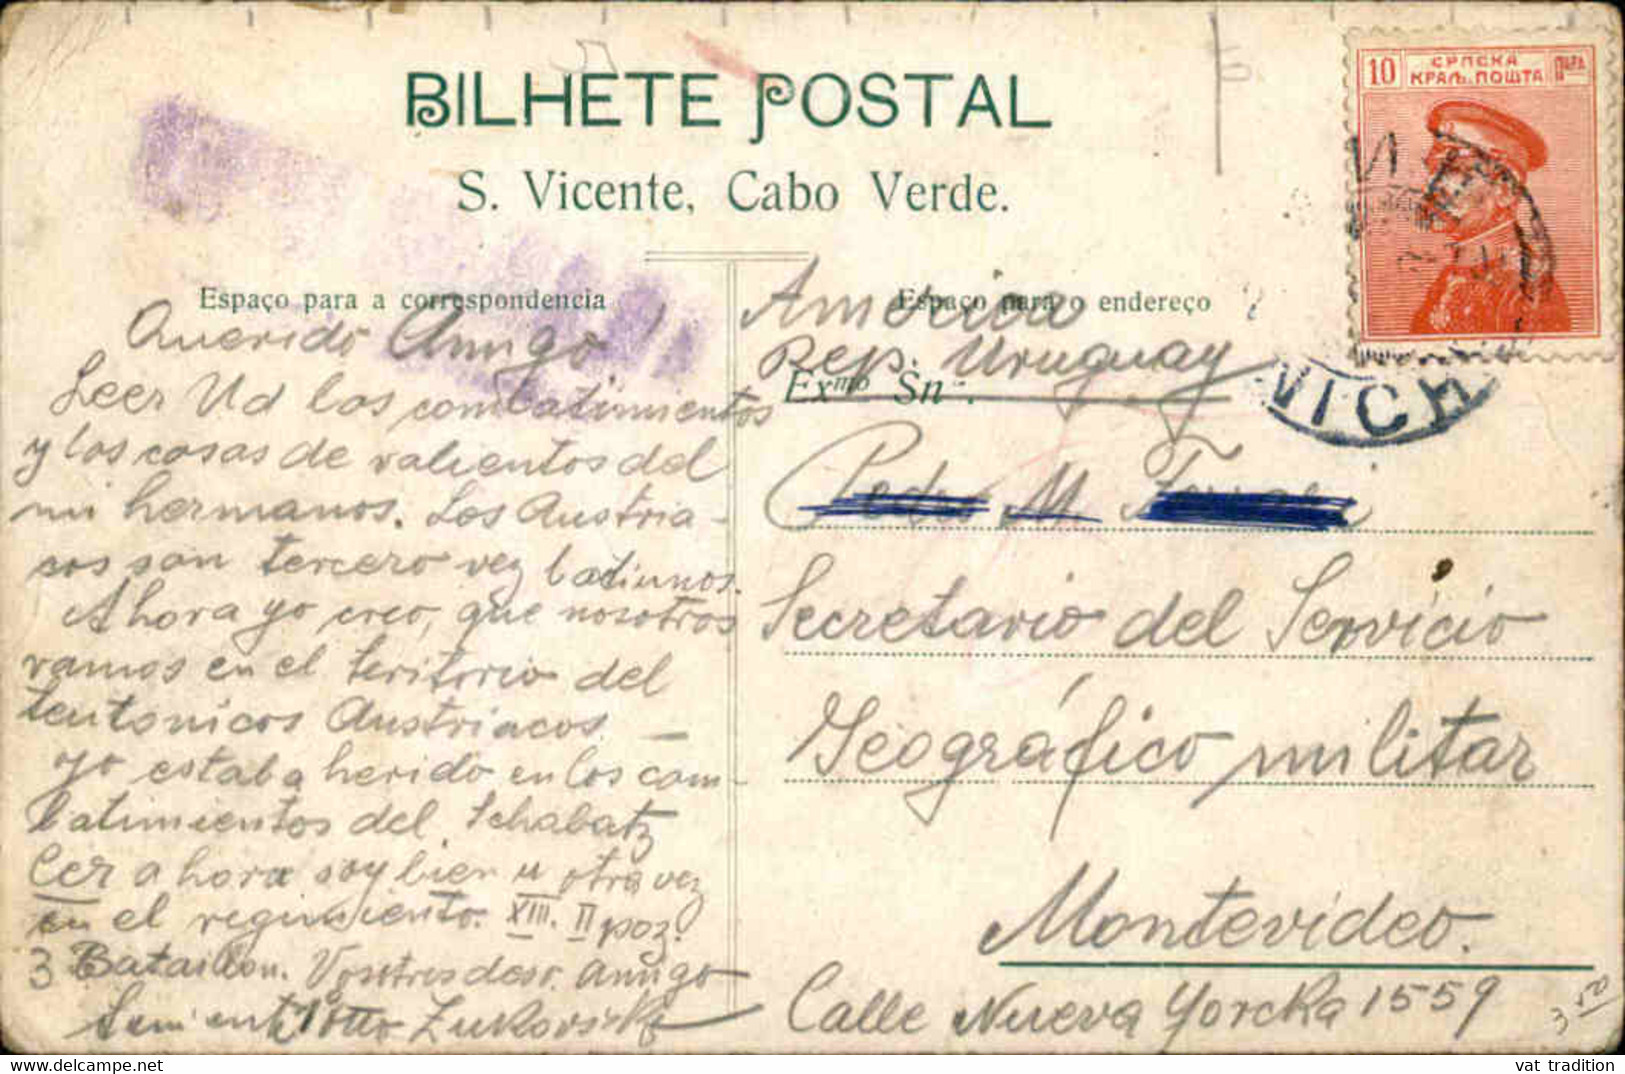 CAP VERT - Carte Postale D'habitation Locale - L 117018 - Cape Verde